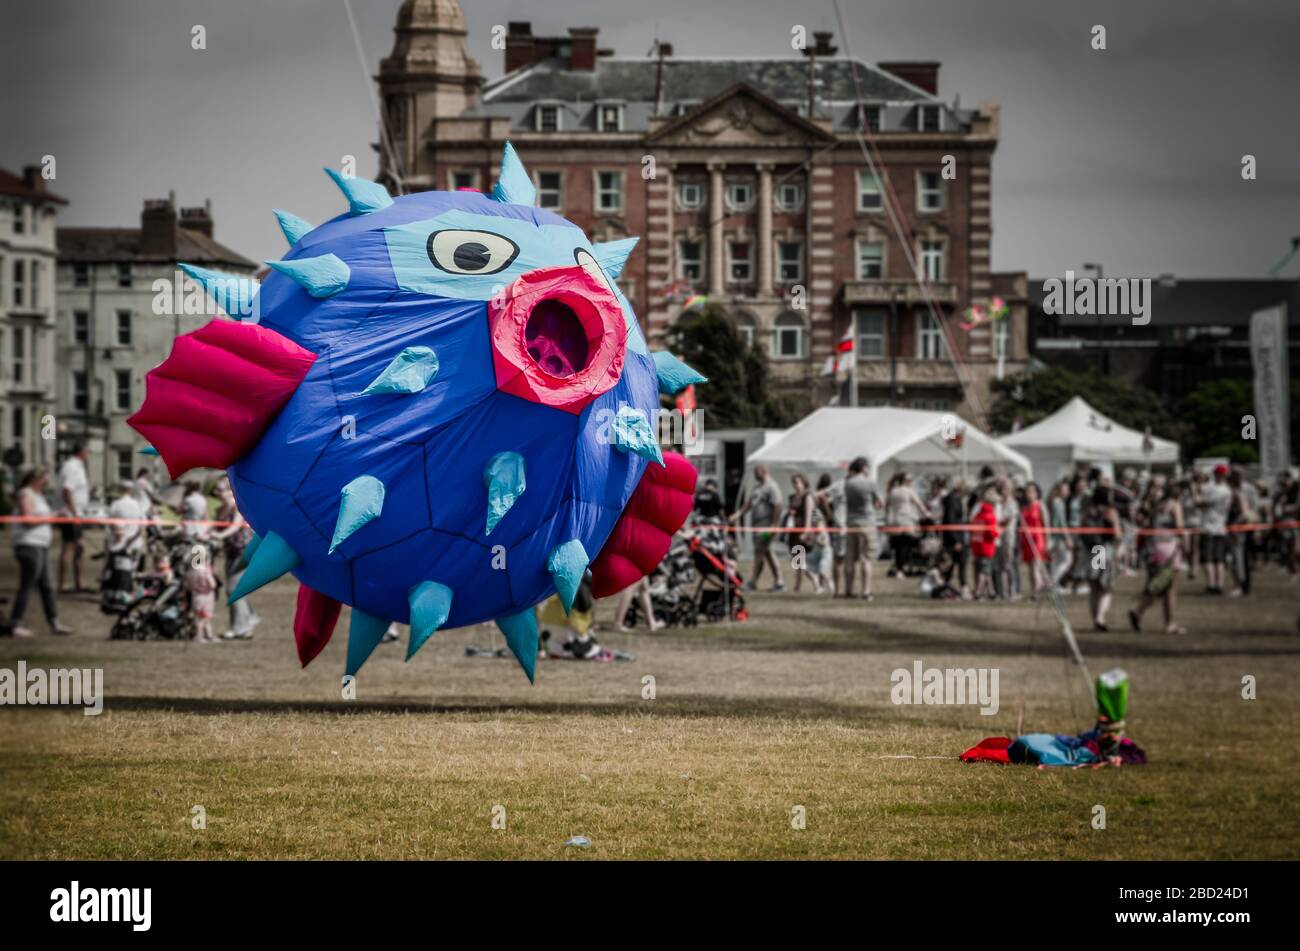 Flying blowfish kite at the Summer Southsea kite festival Event, Portsmouth, UK Stock Photo